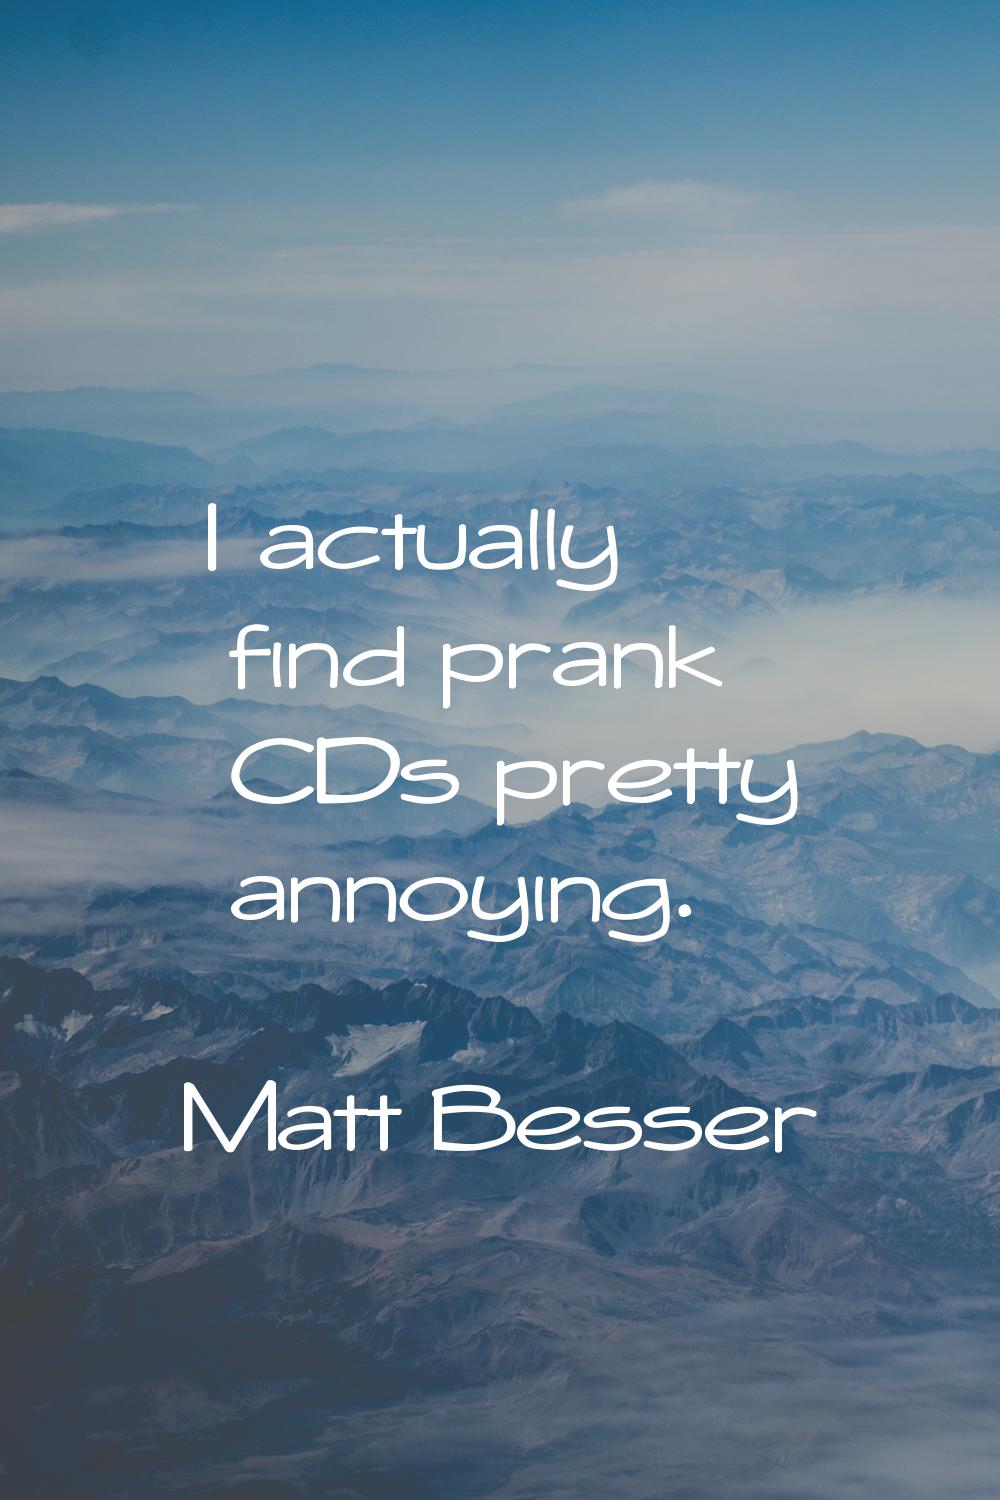 I actually find prank CDs pretty annoying.